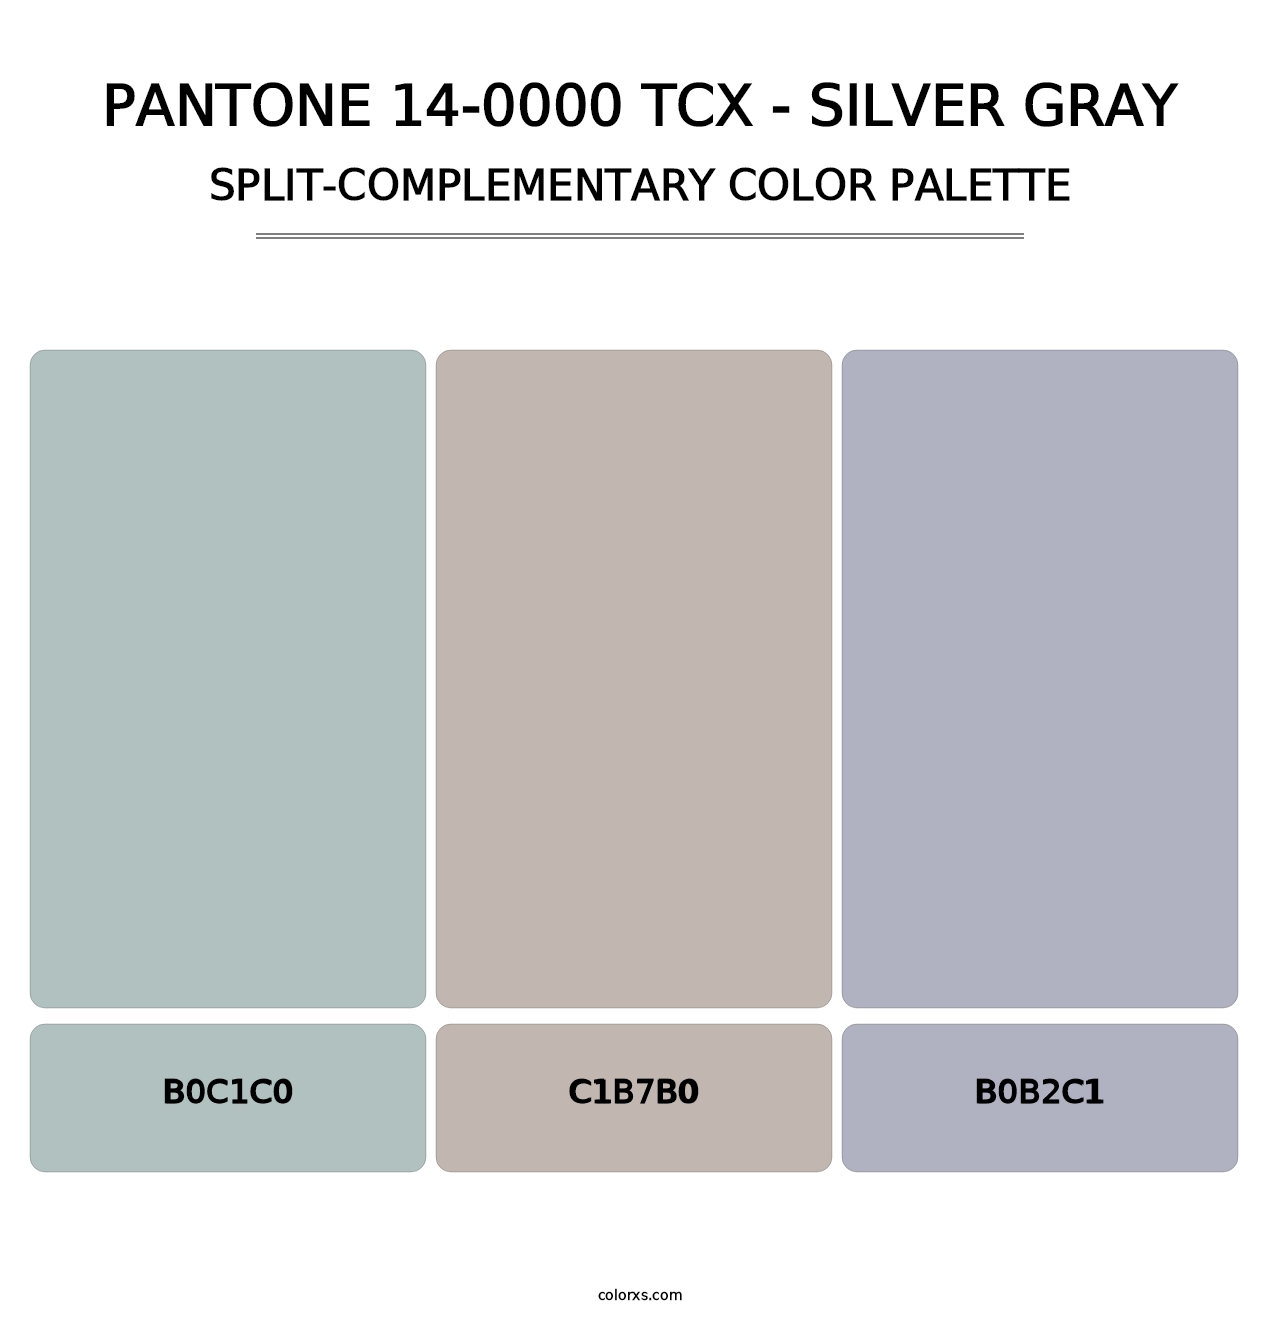 PANTONE 14-0000 TCX - Silver Gray - Split-Complementary Color Palette